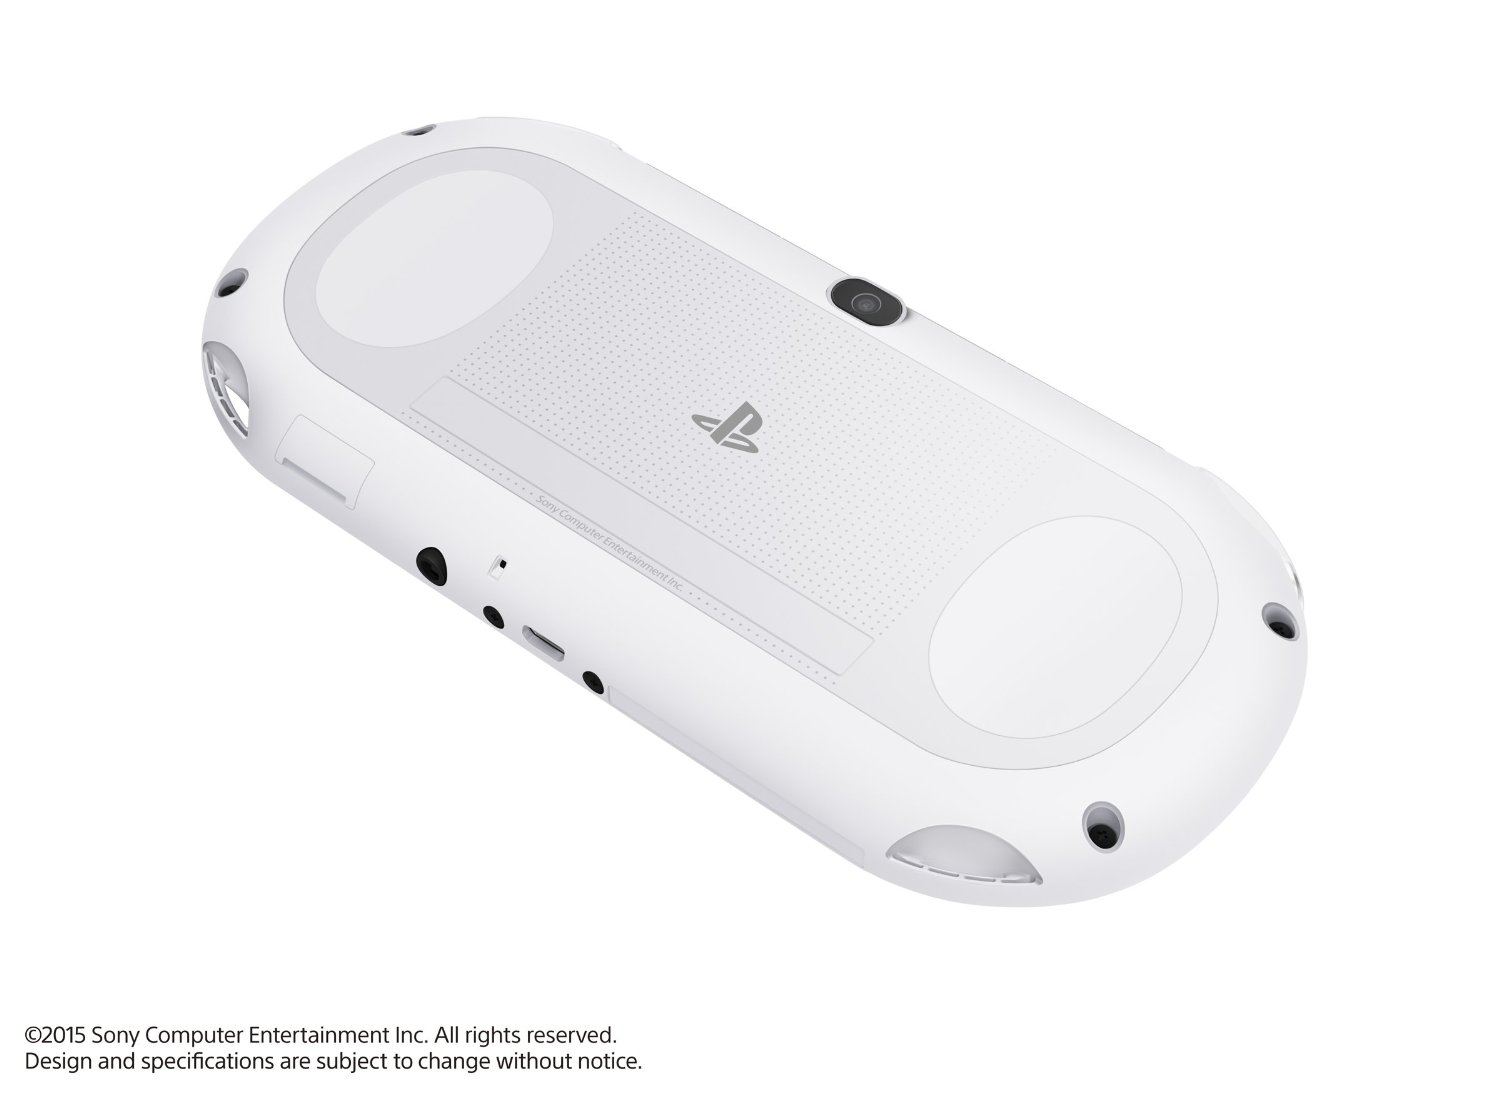 PlayStation Vita Starter Kit (Glacier White)